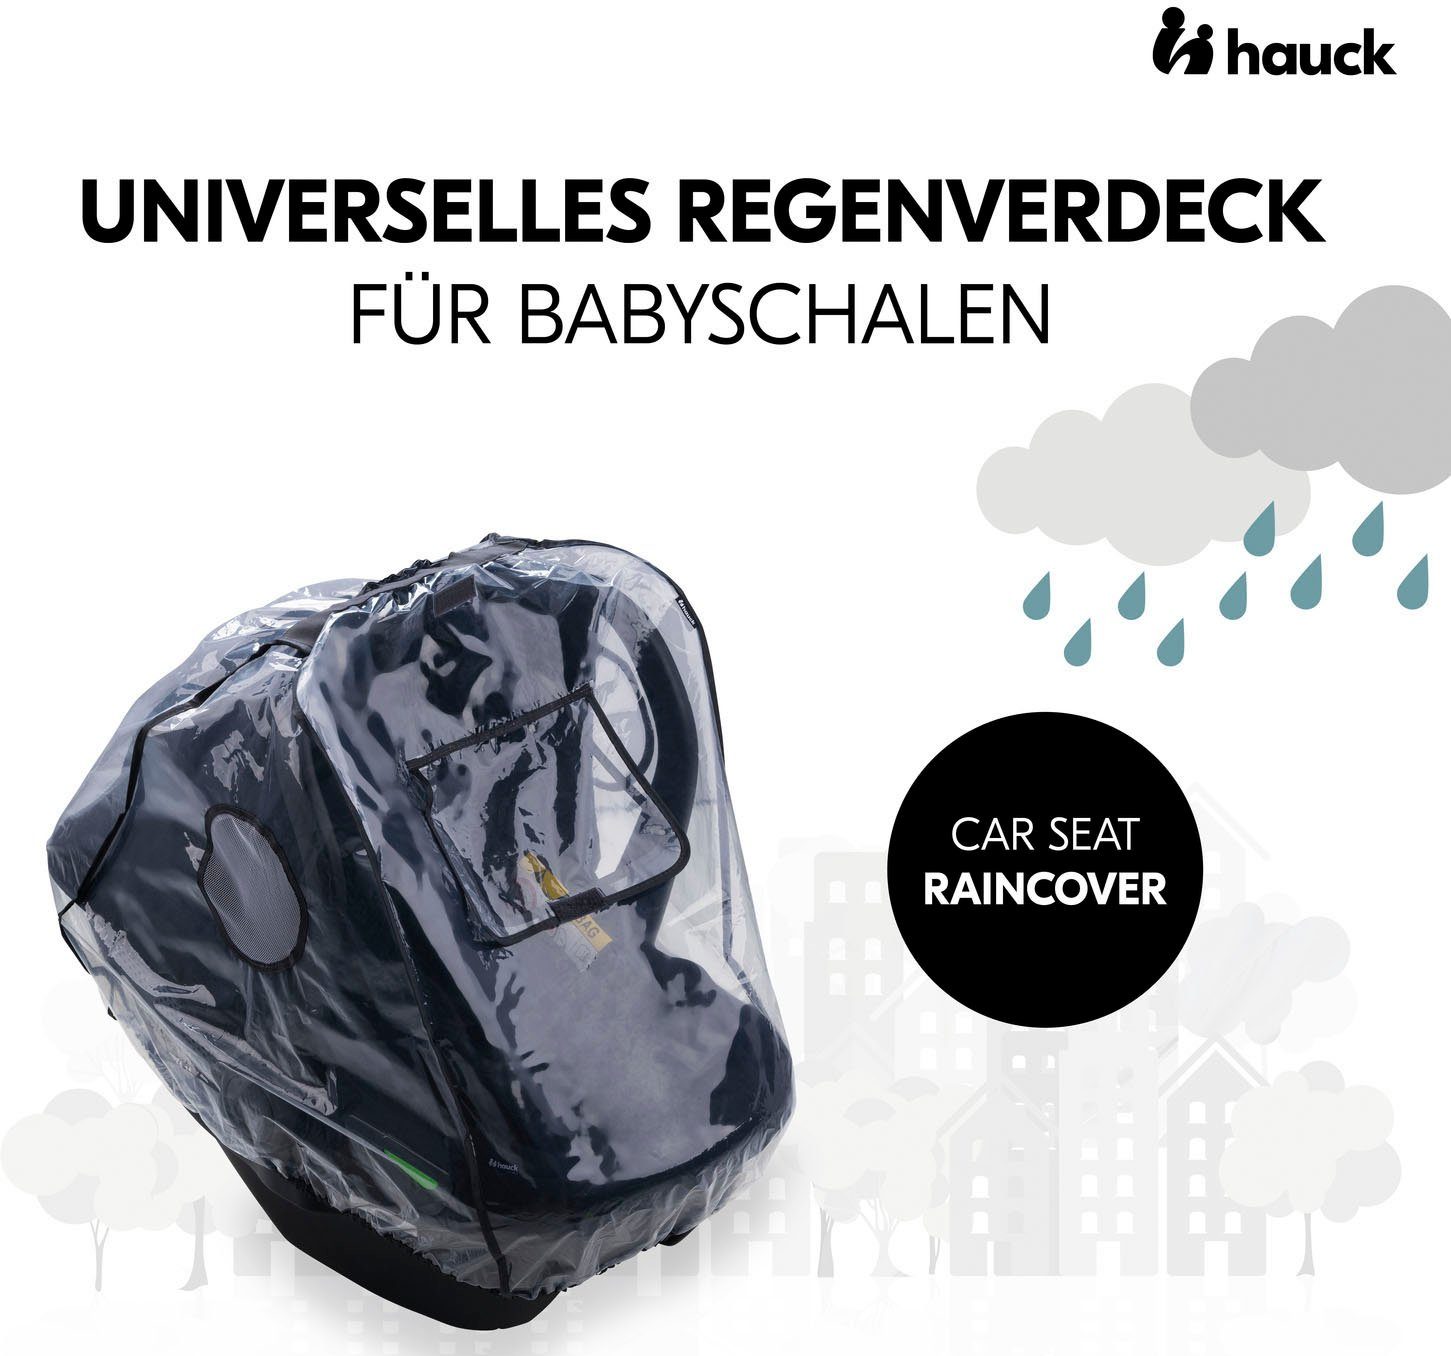 Raincover, Seat Car universal Hauck Regenverdeck